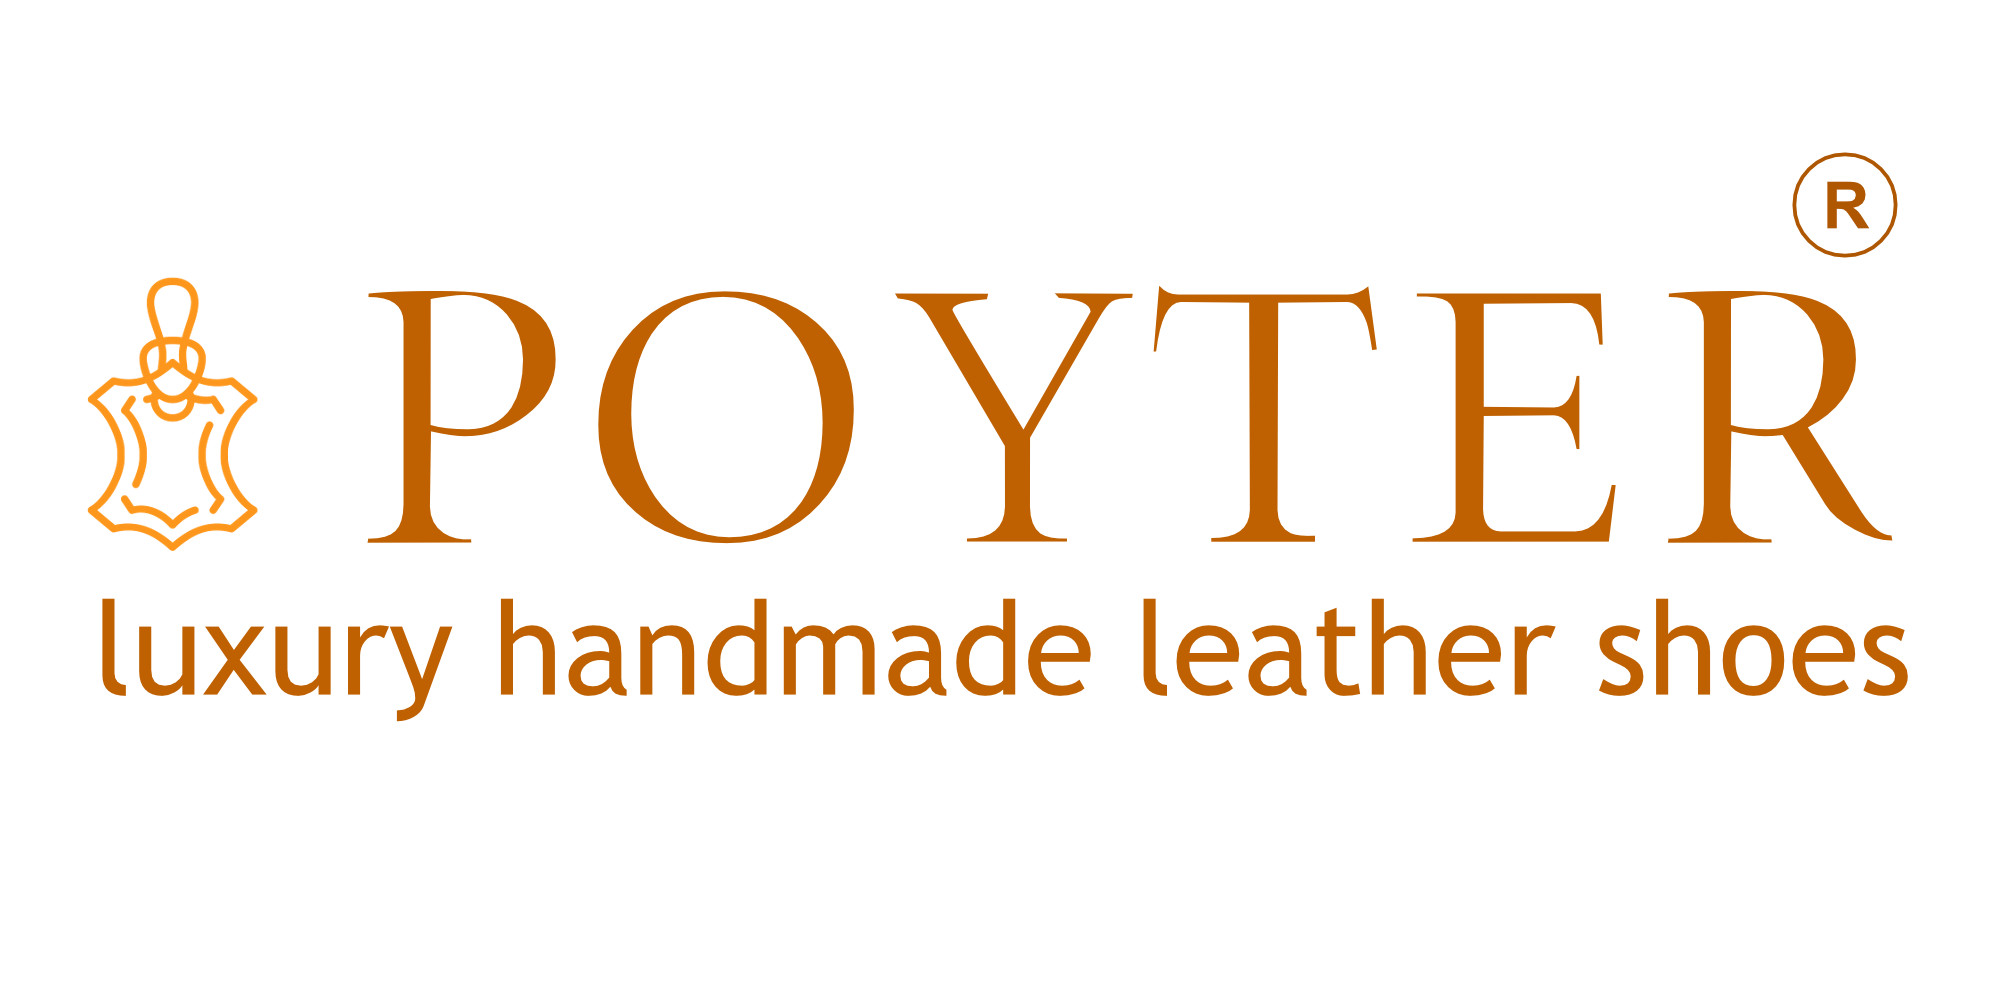 Poyter Shoes